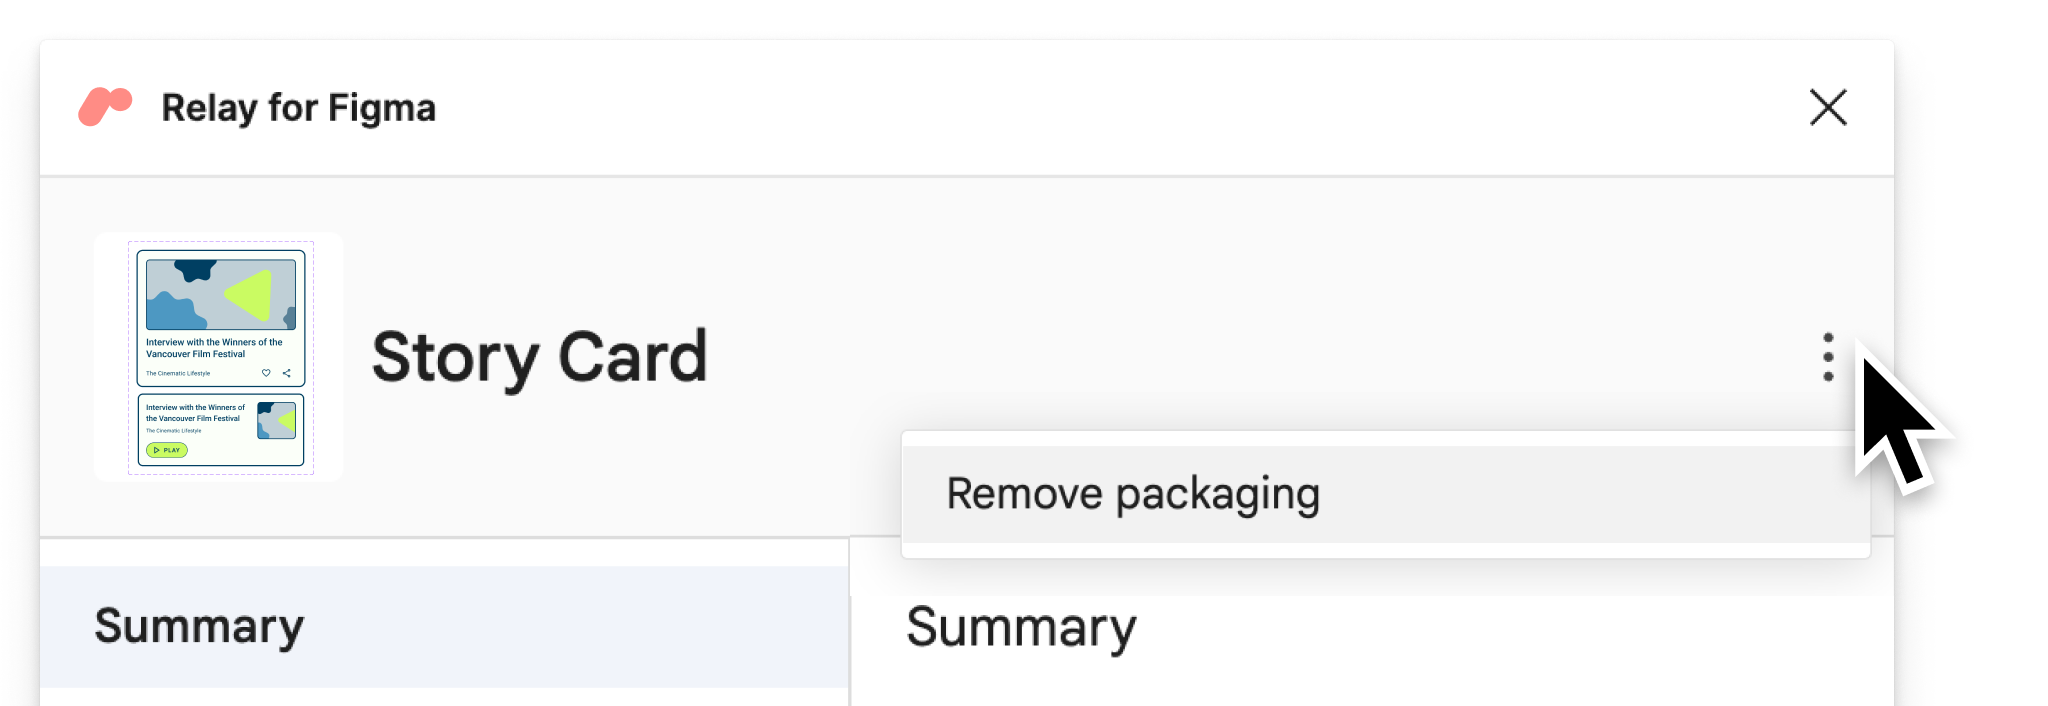 插件中的“Remove packaging”选项